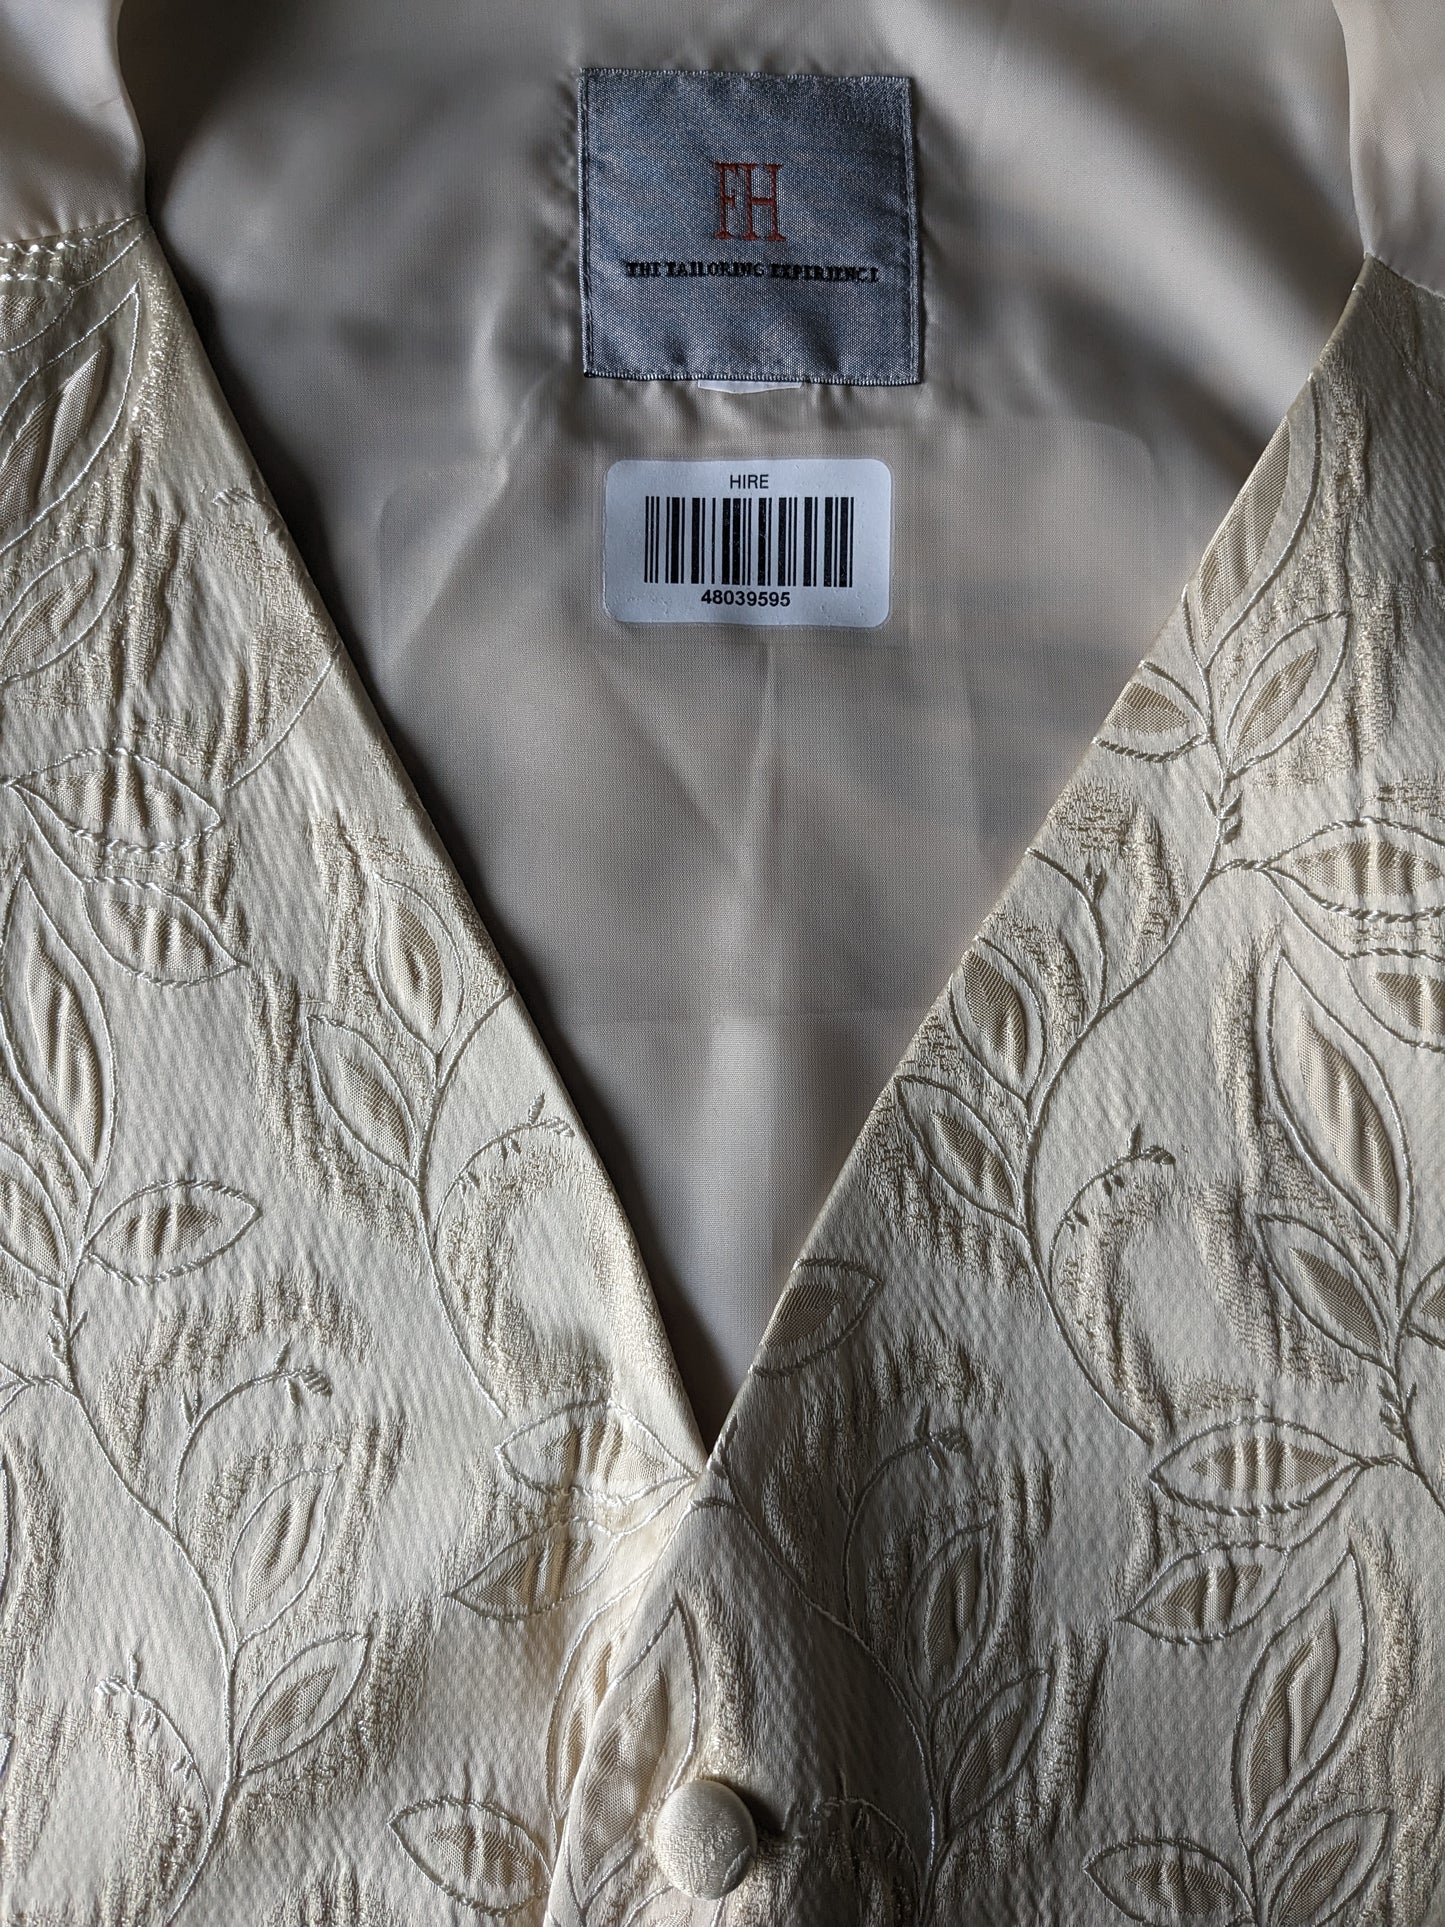 FH waistcoat. Beige motif. Size 3XL / XXXL.